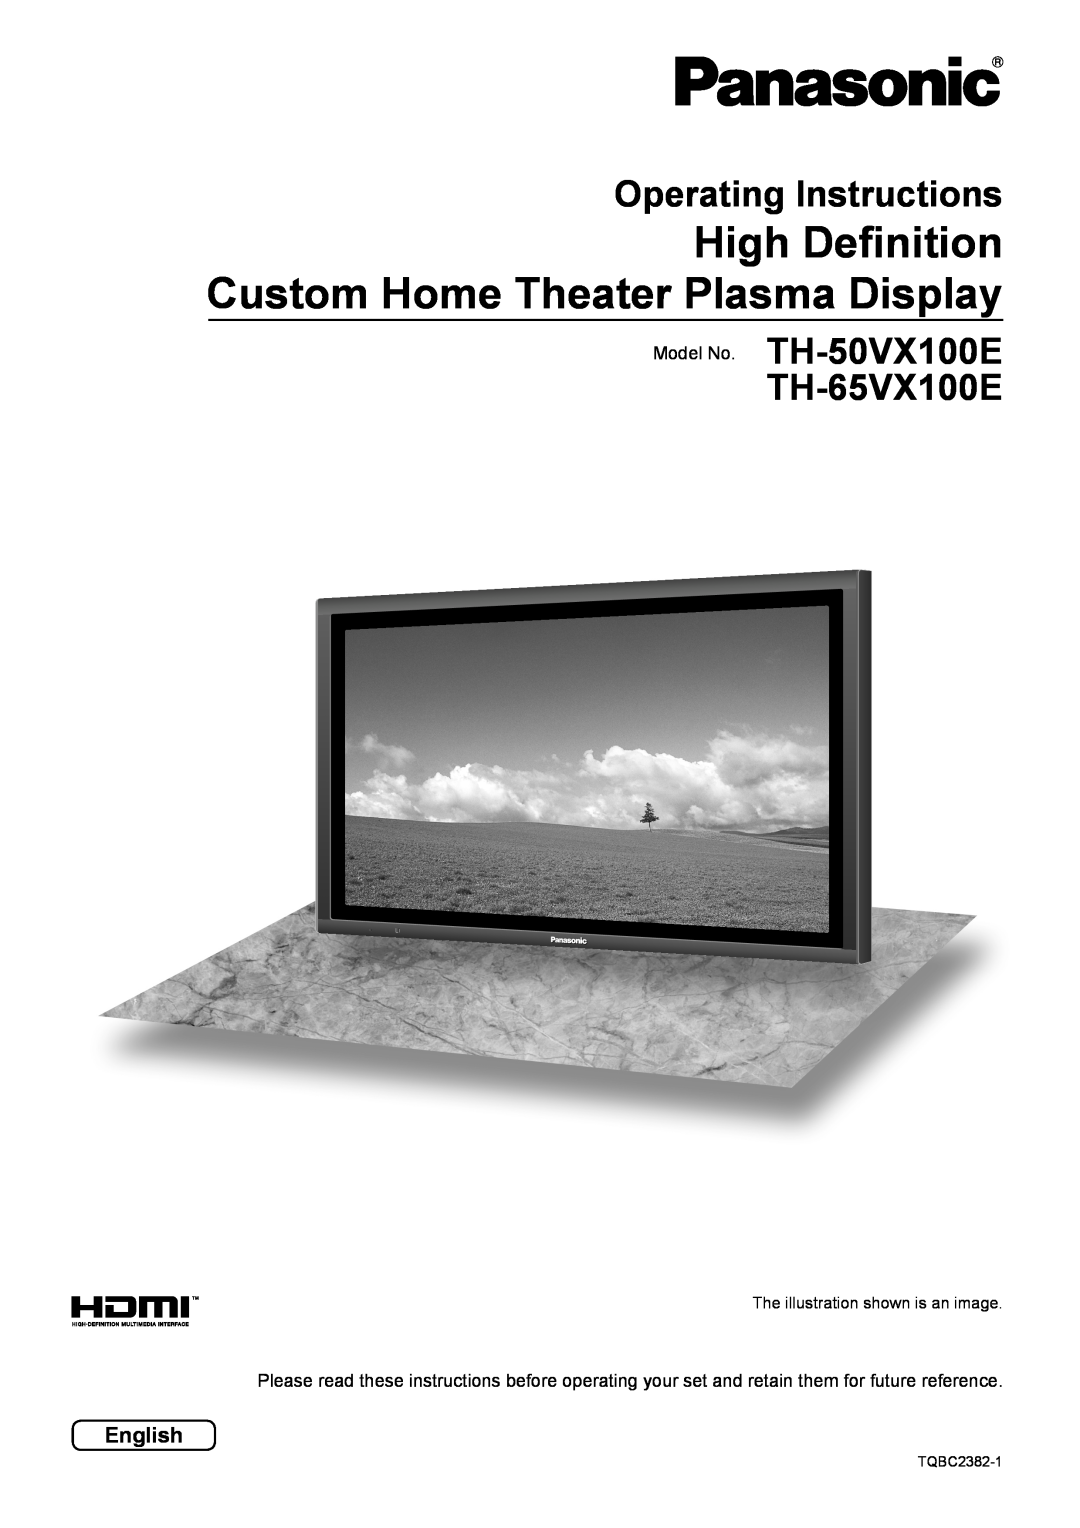 Panasonic TH-50VX100E operating instructions High Definition Custom Home Theater Plasma Display, Operating Instructions 